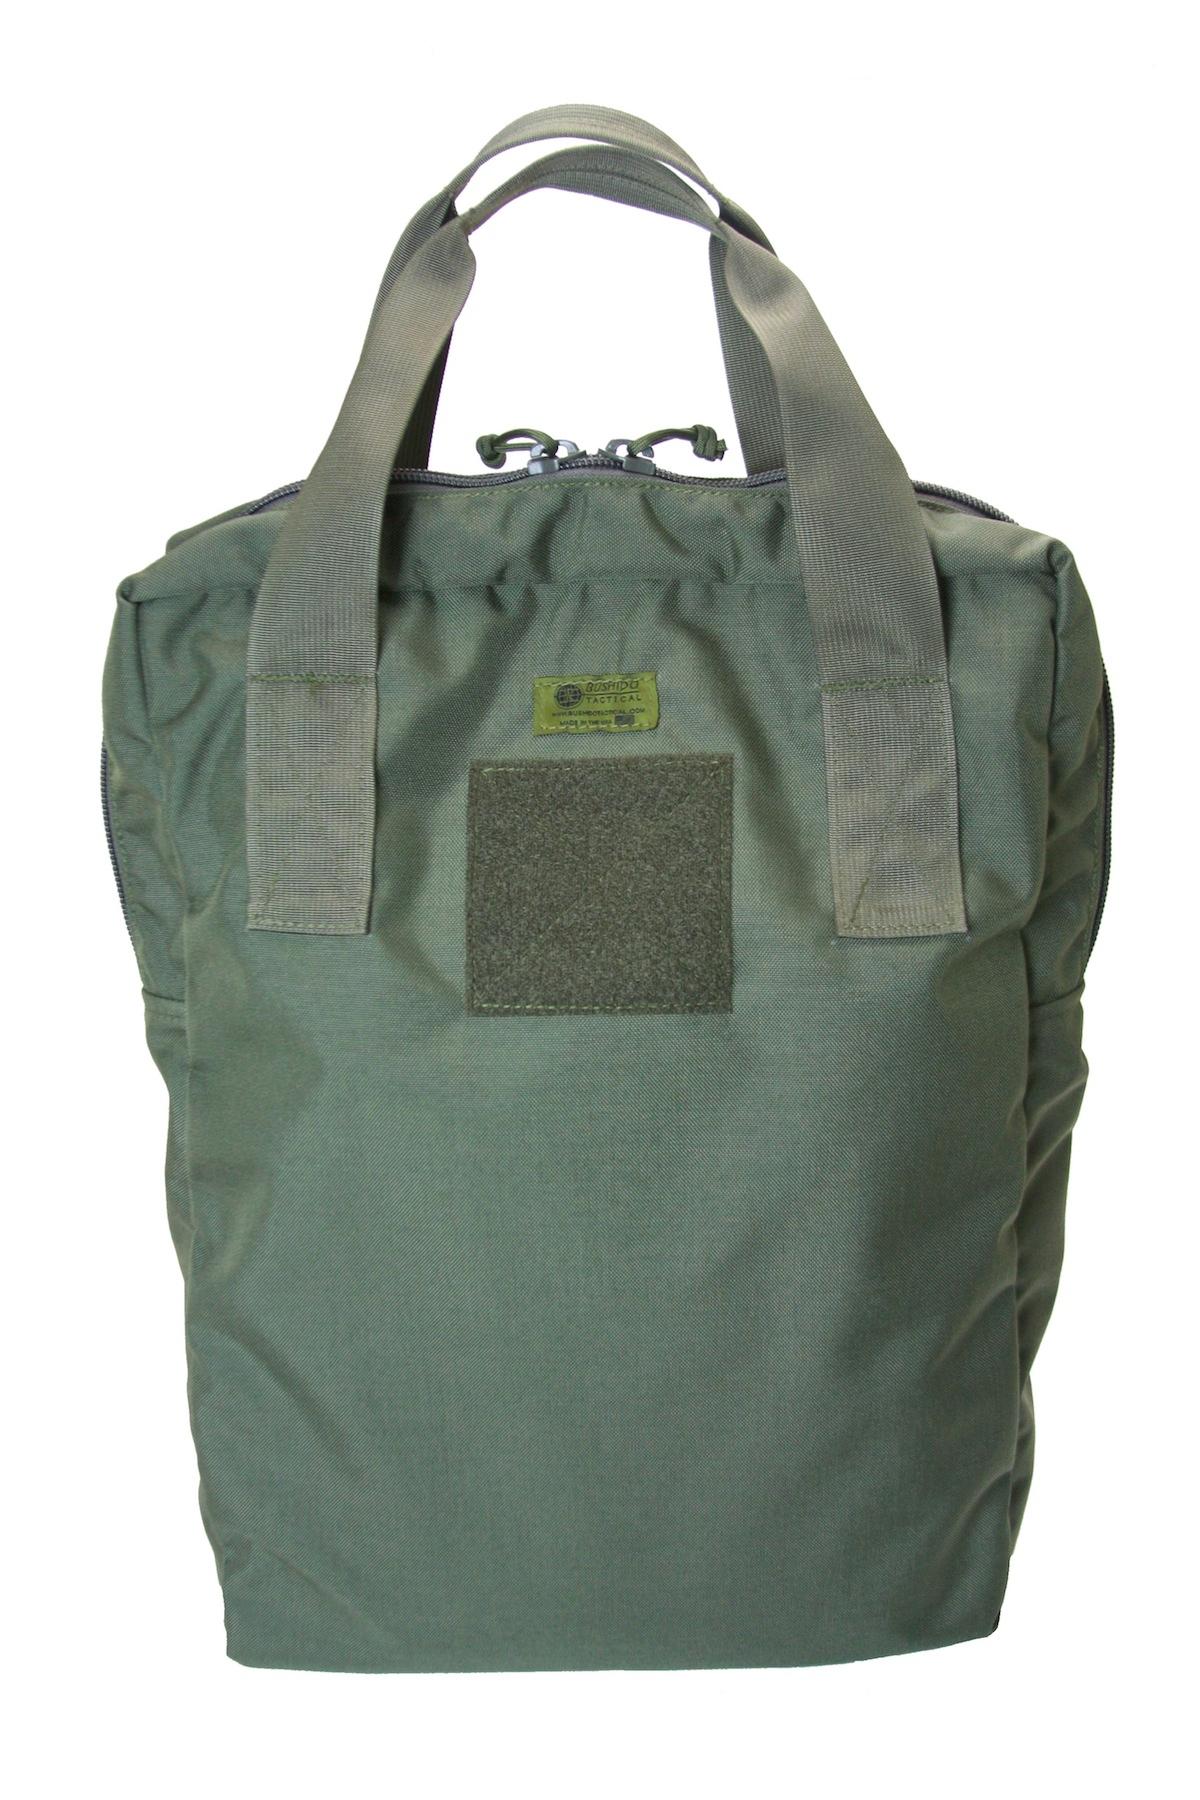 Gear / Utility/ Plate Carrier Bag - Medium - Bushido Tactical